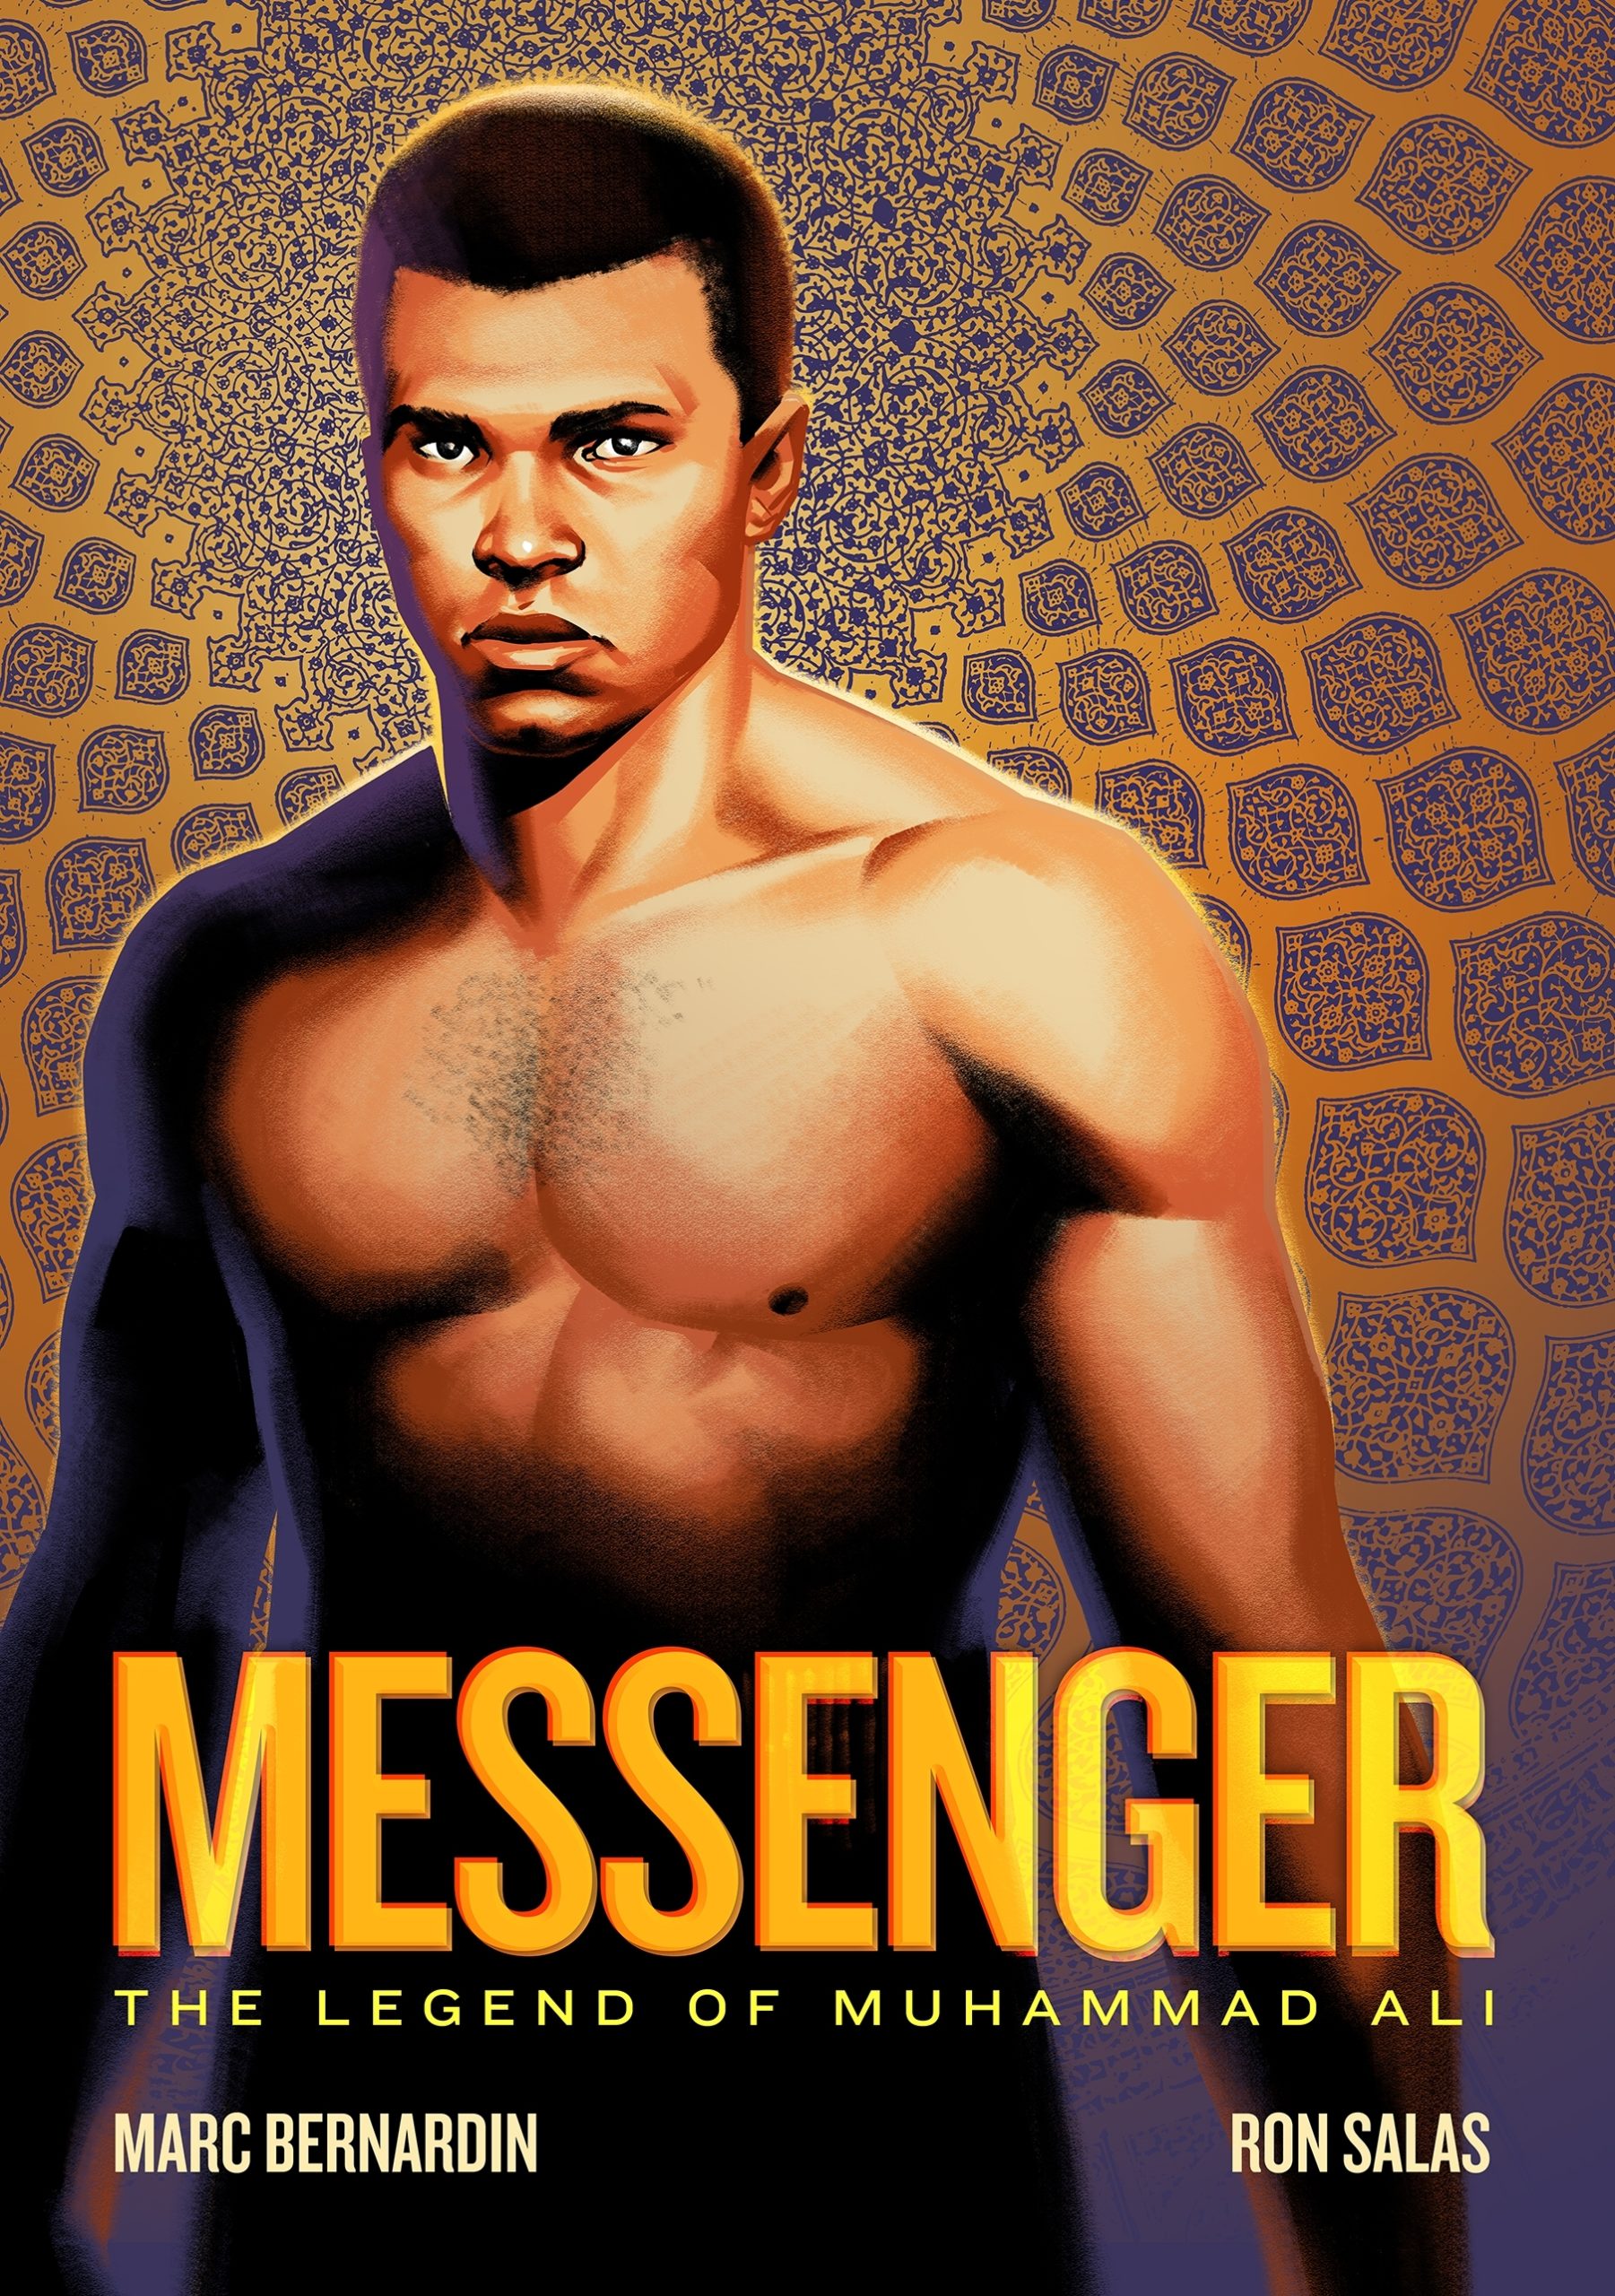 Images for Messenger: The Legend of Muhammad Ali